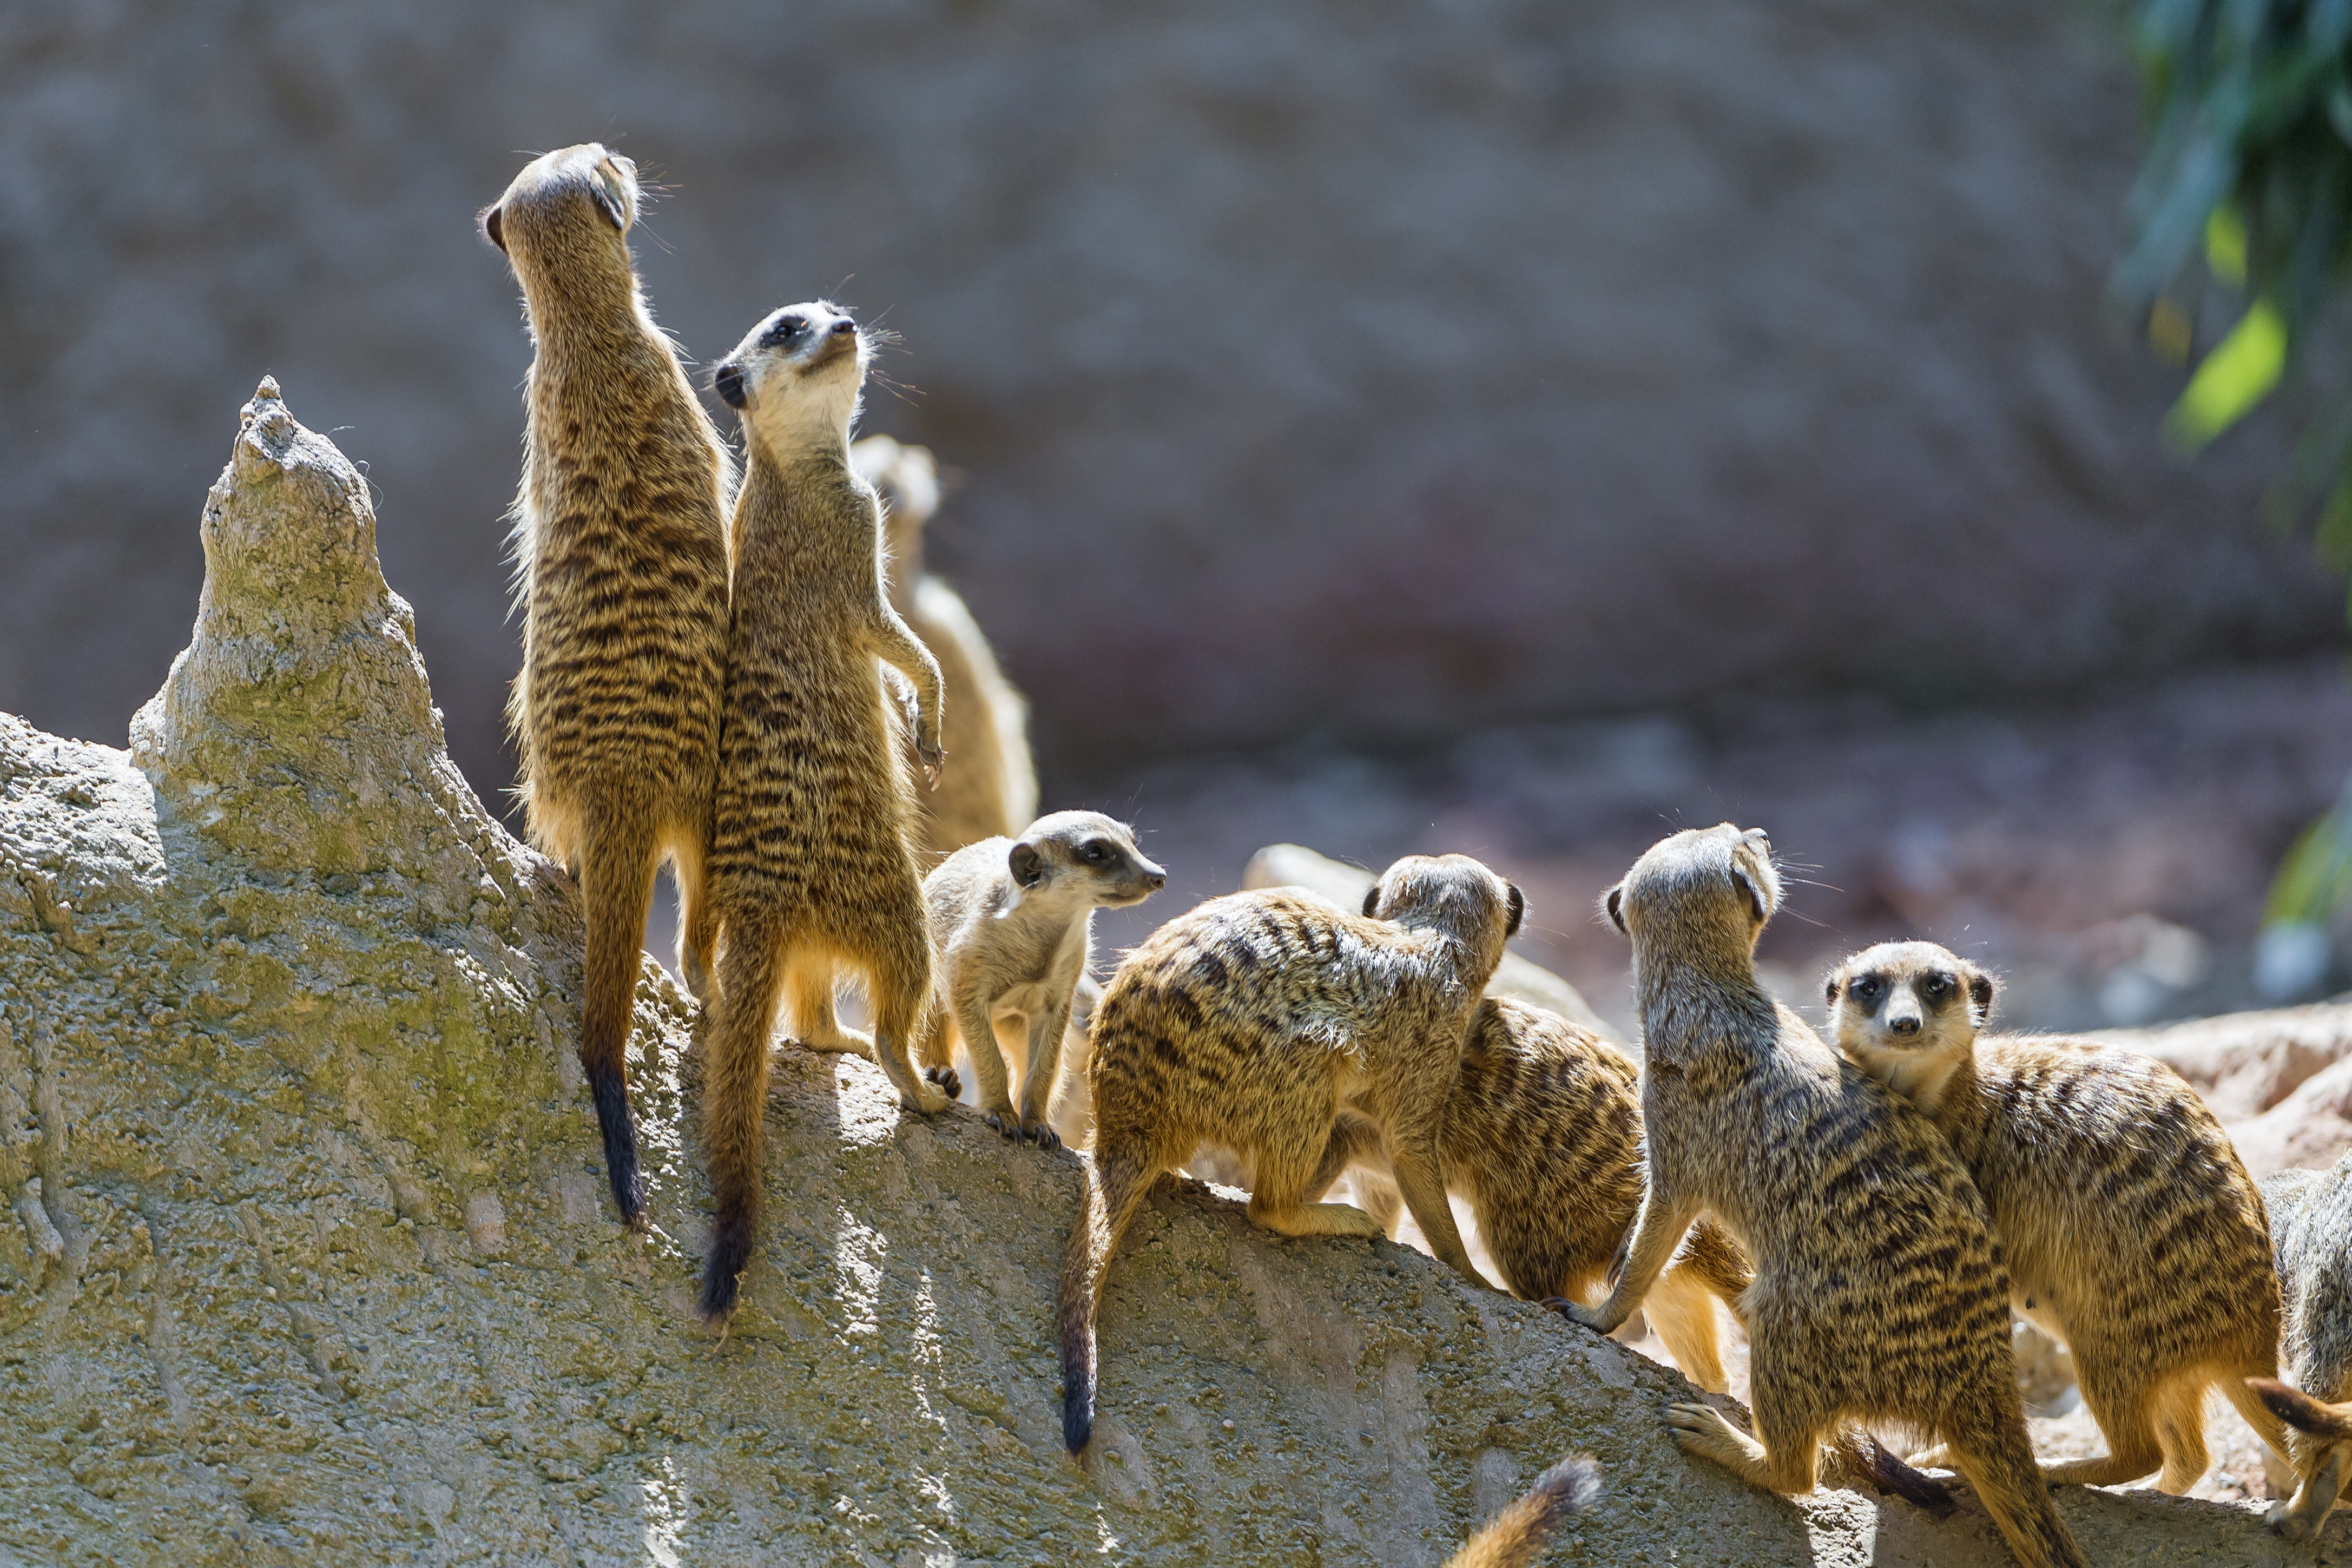 Multiple meerkats standing guard on a rock